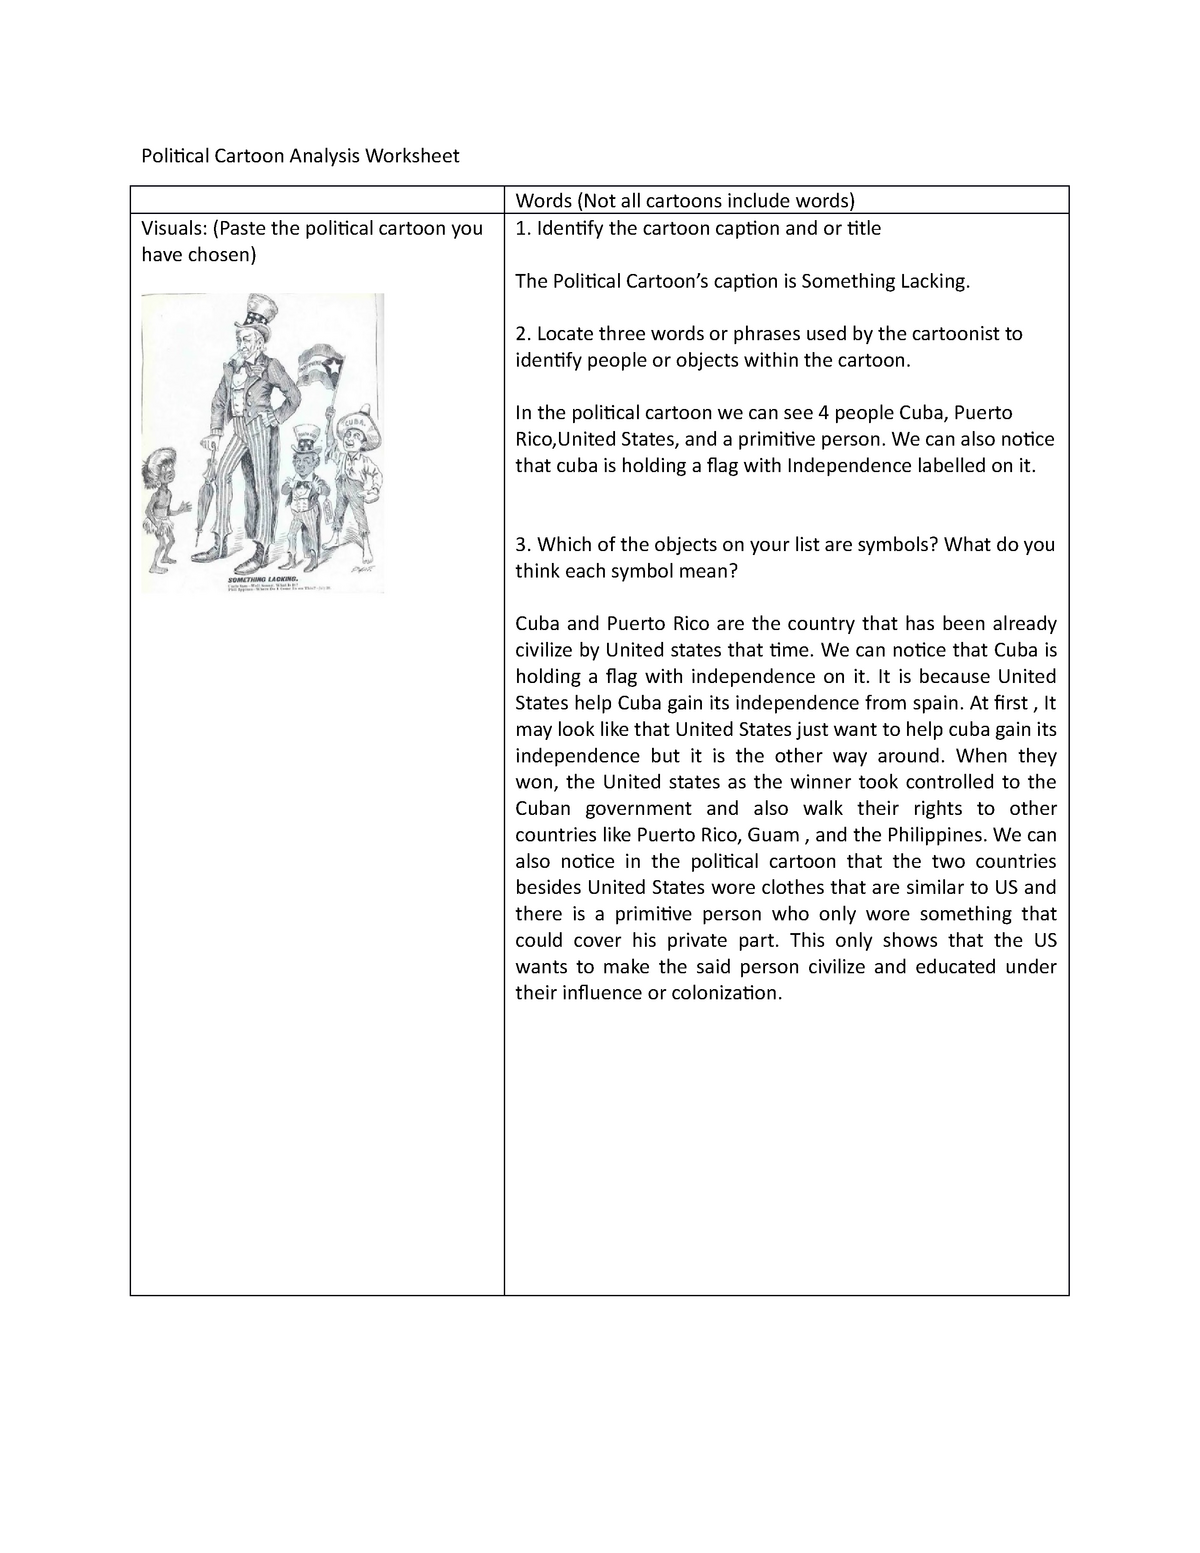 Political cartoon worksheet di ko alam basta - Human Resource Regarding Political Cartoon Analysis Worksheet